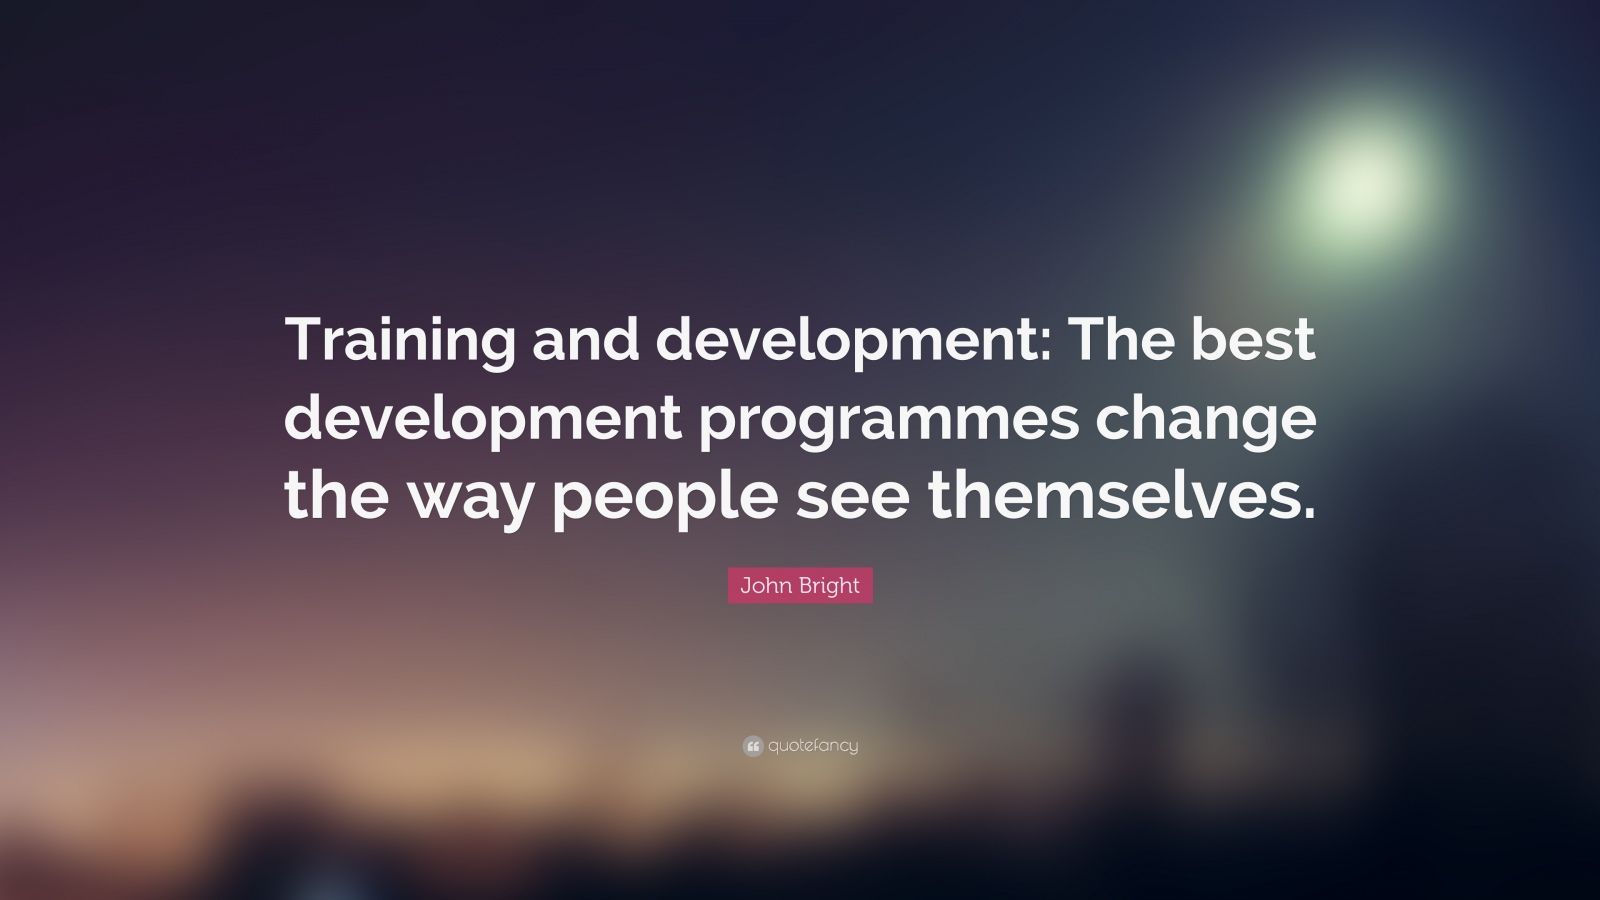 John Bright Quote: “Training and development: The best development